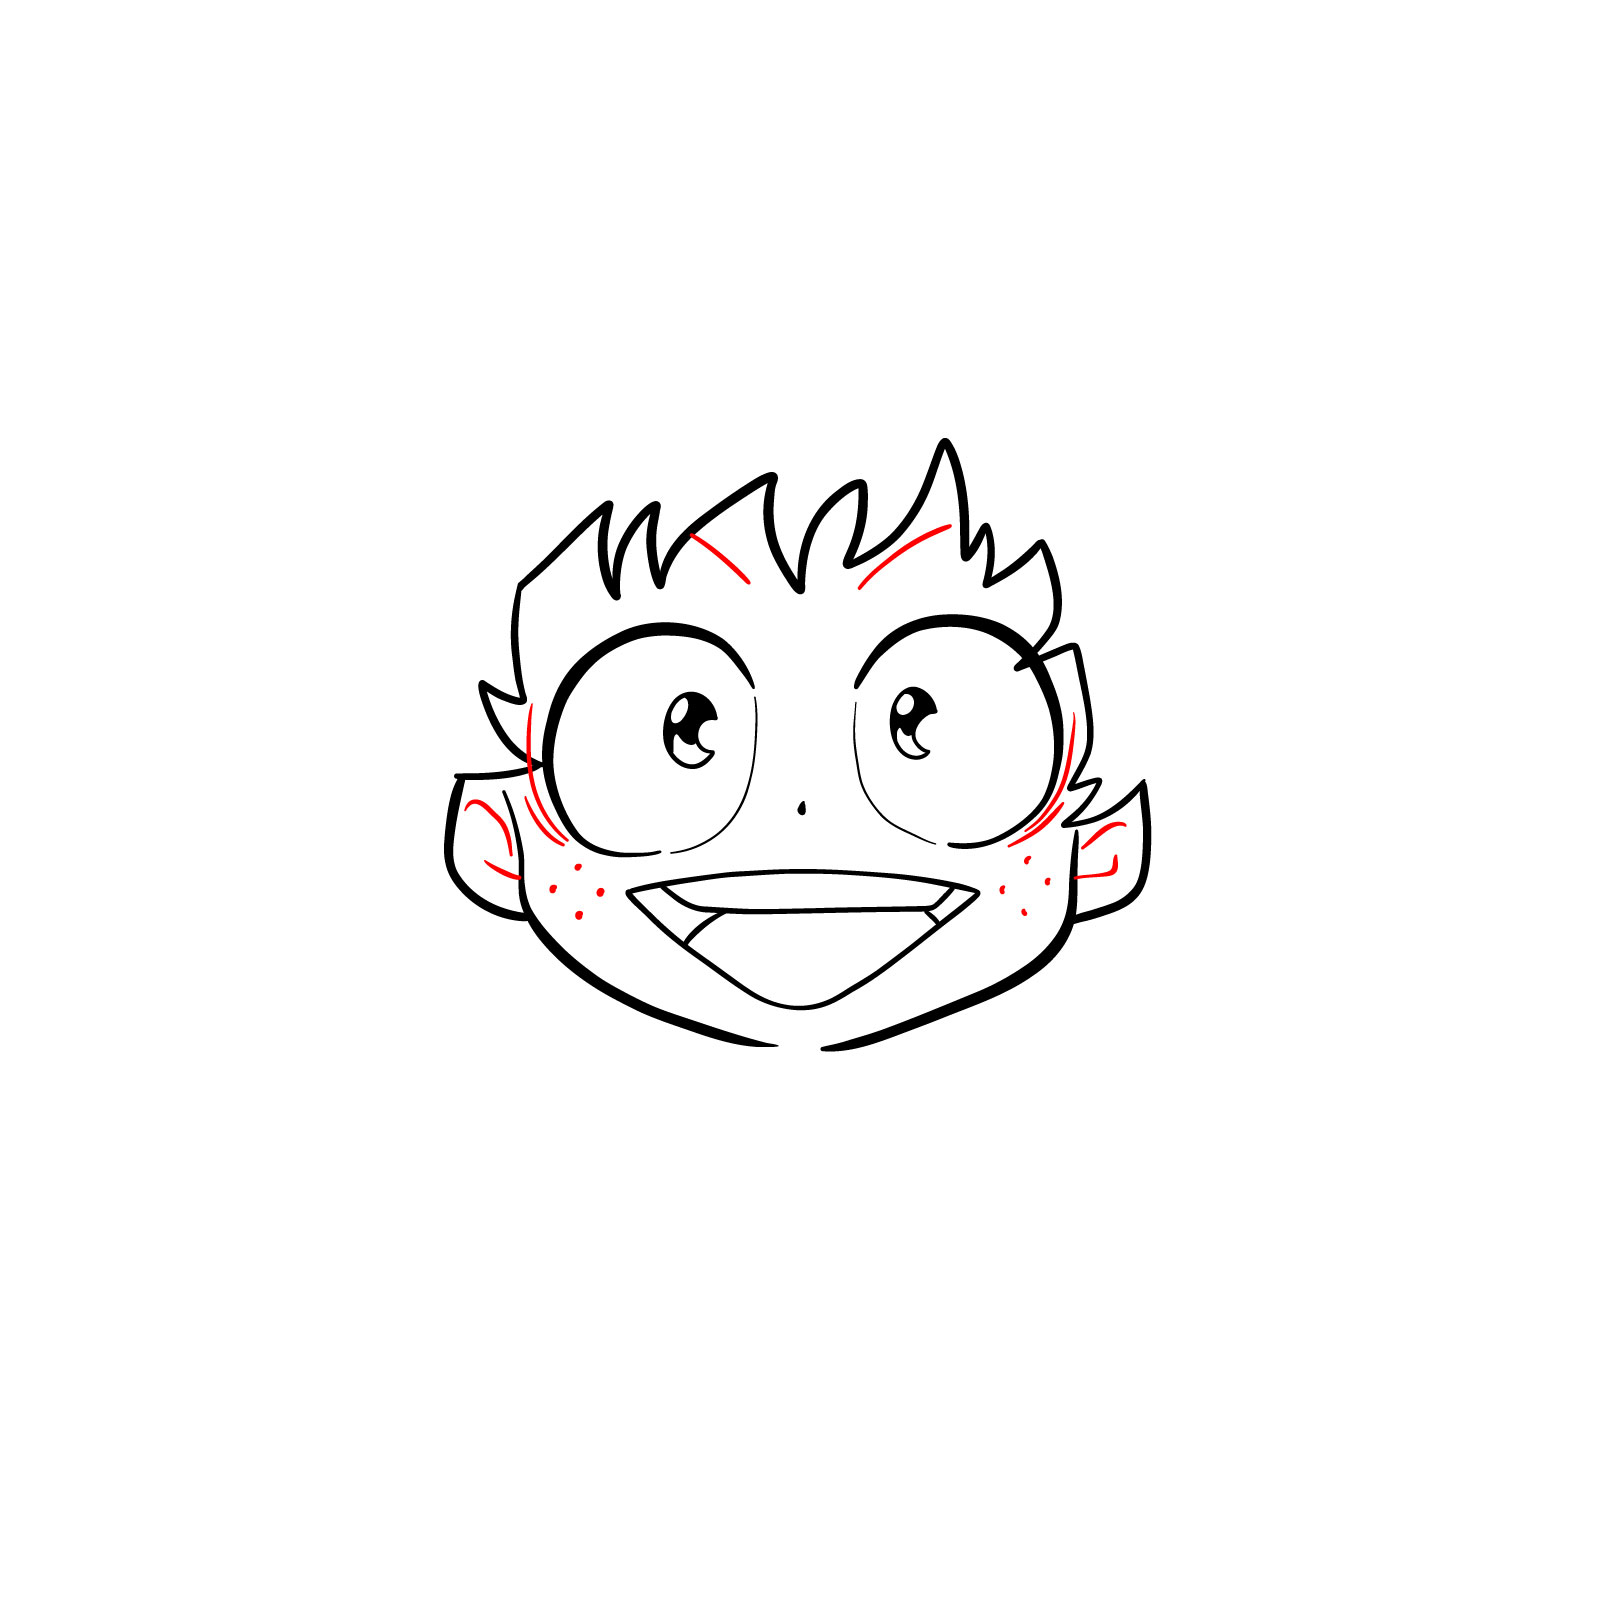 How to draw How to draw Izuku's child face - step 12